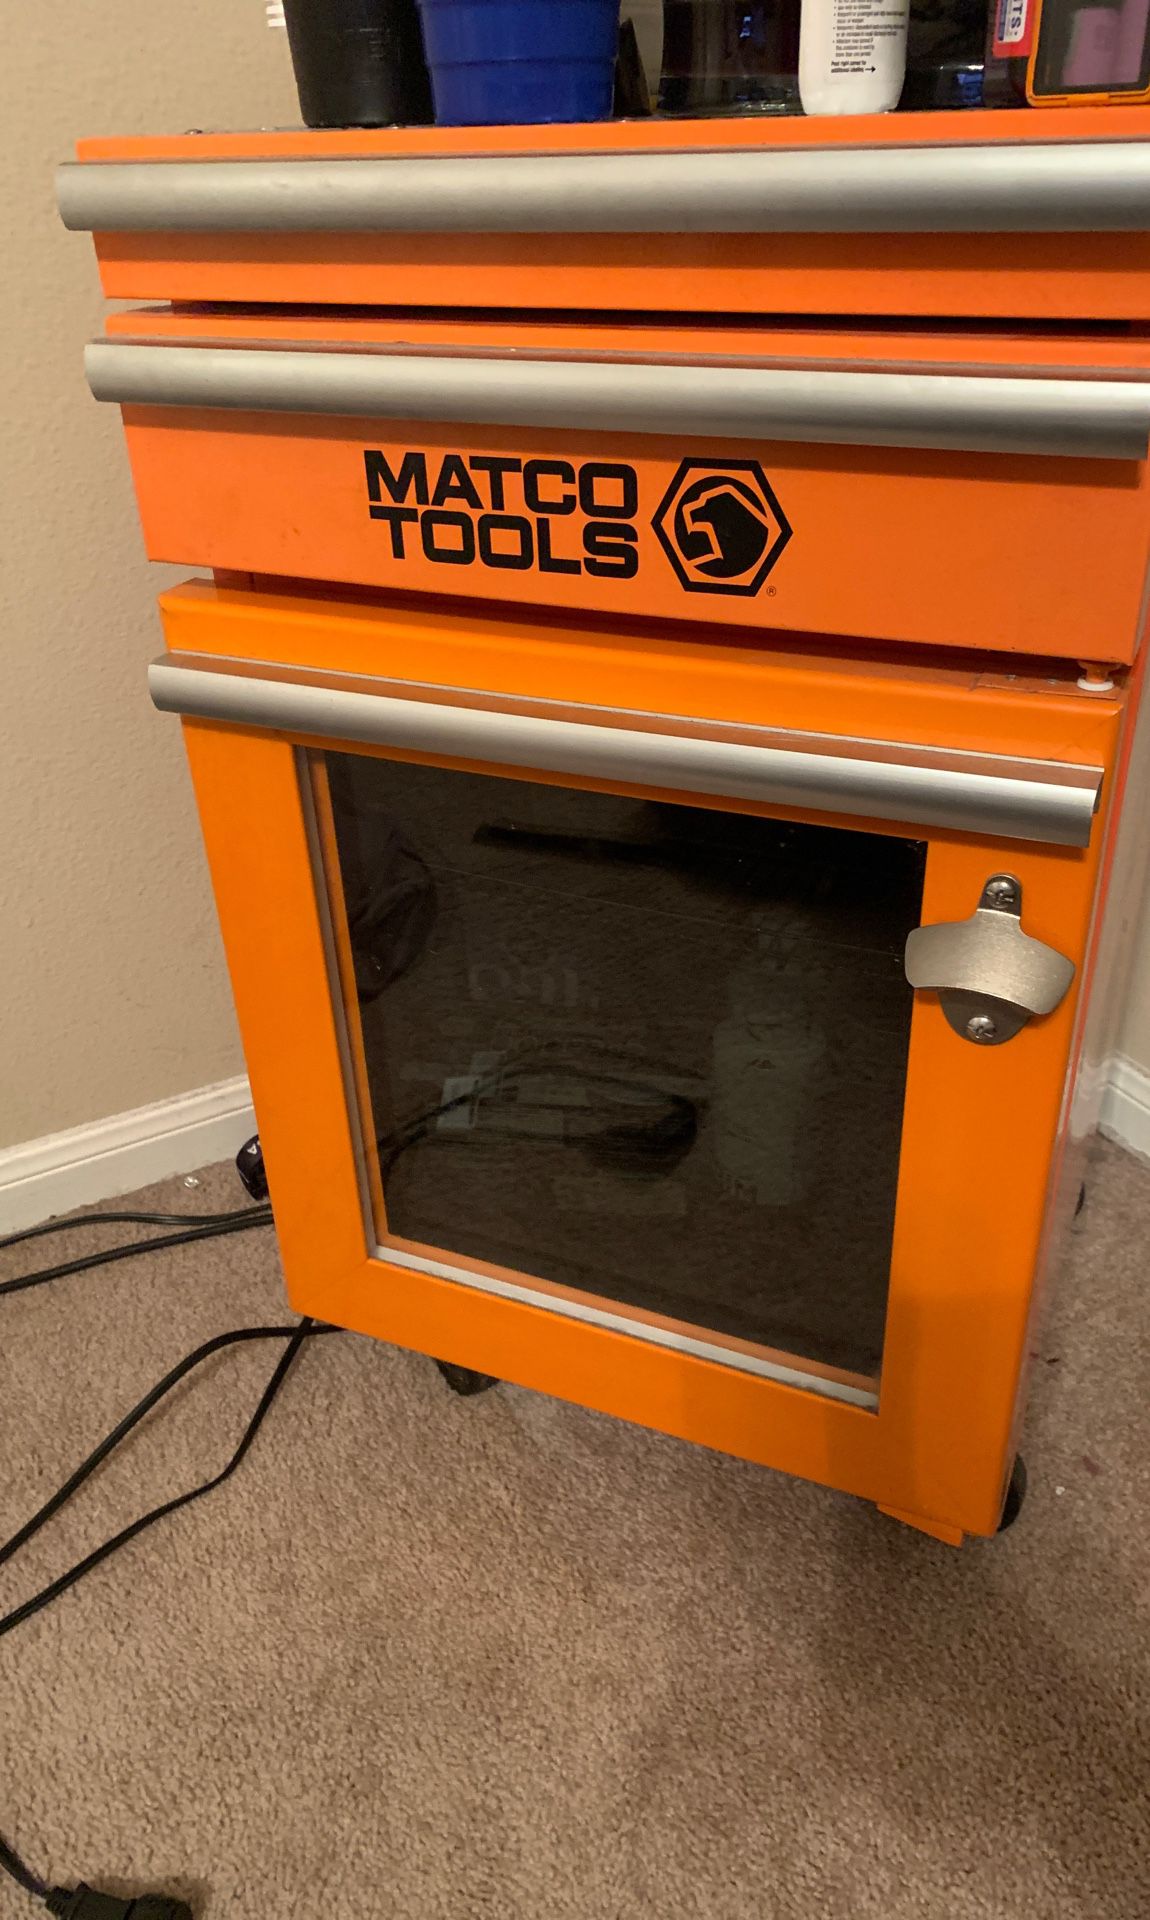 Matco tools refrigerator